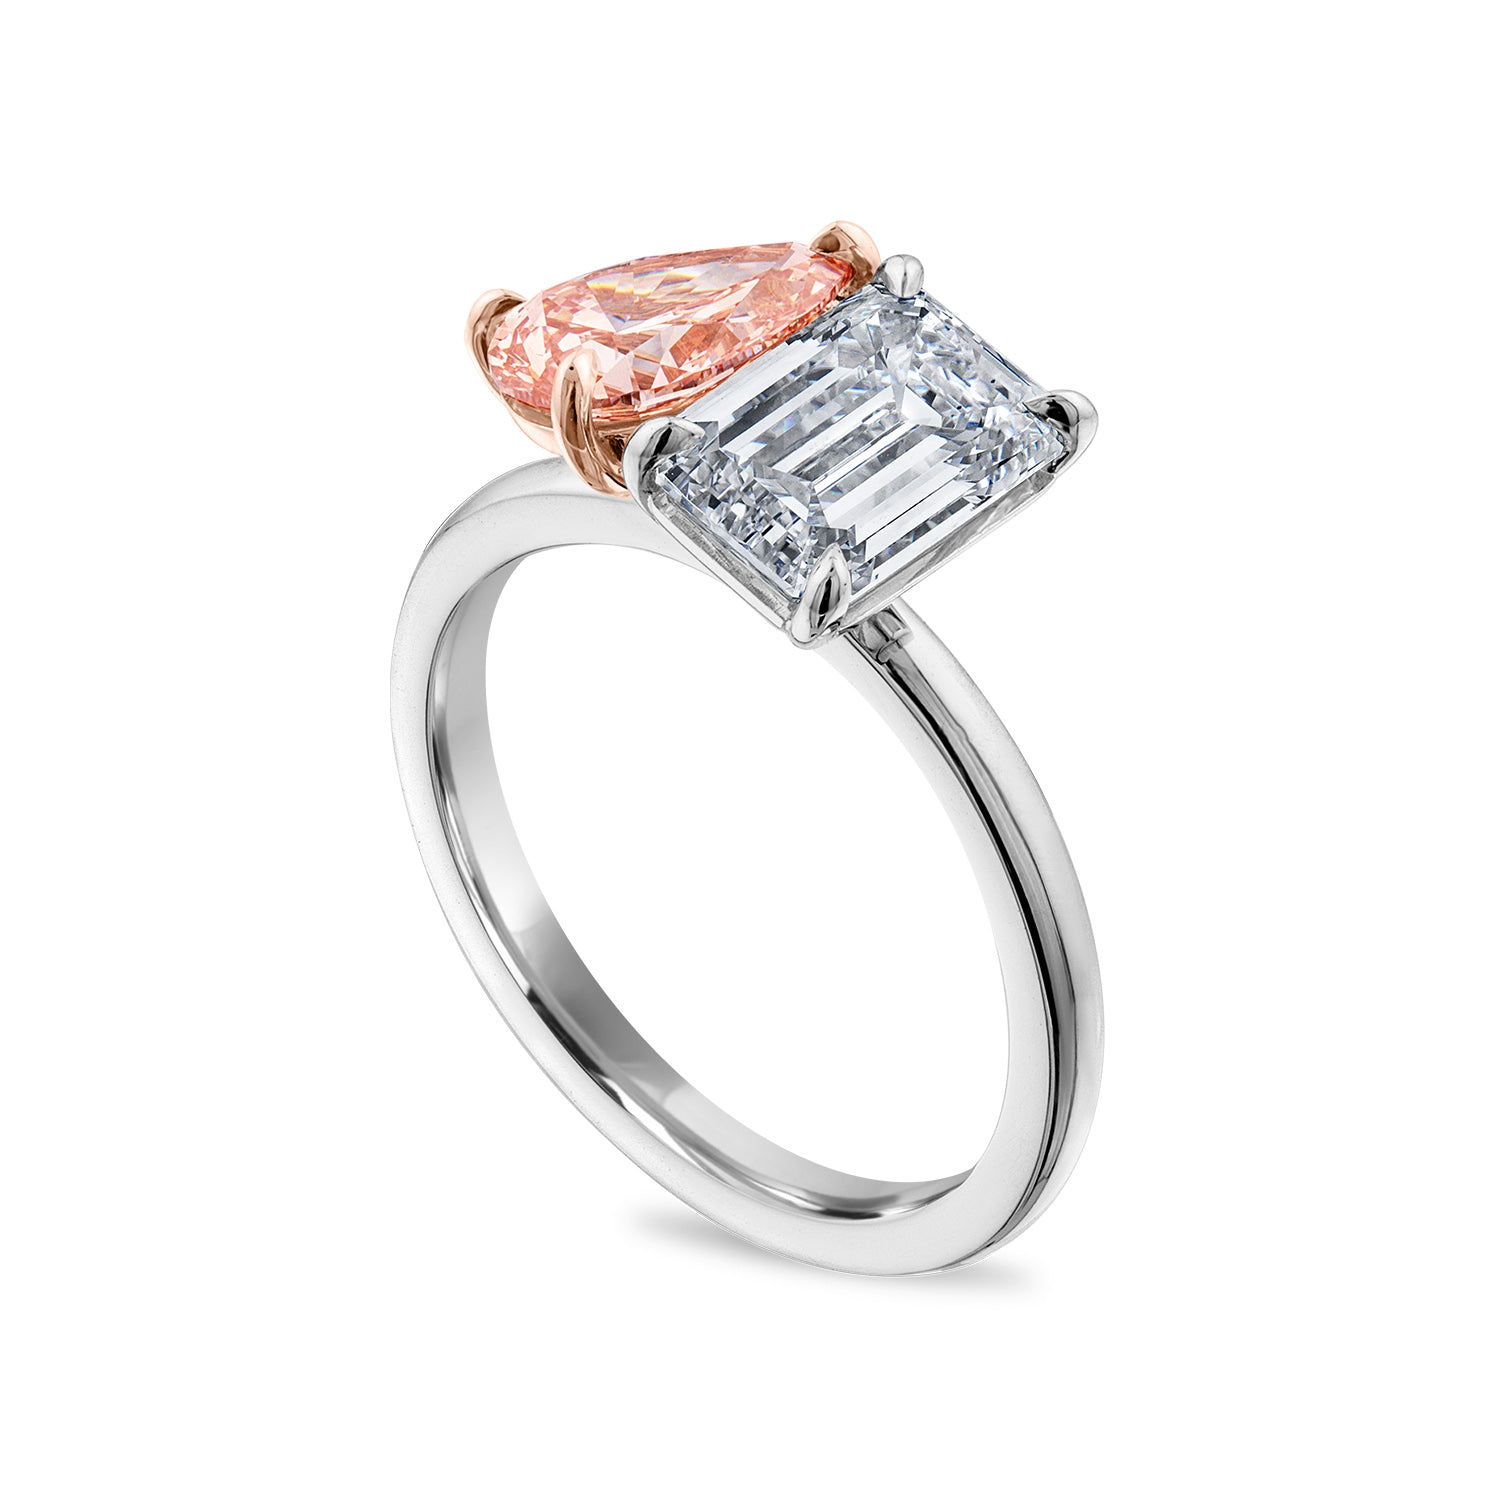 Moi et Toi Style Pink Pear Shape Diamond Emerald-Cut Diamond